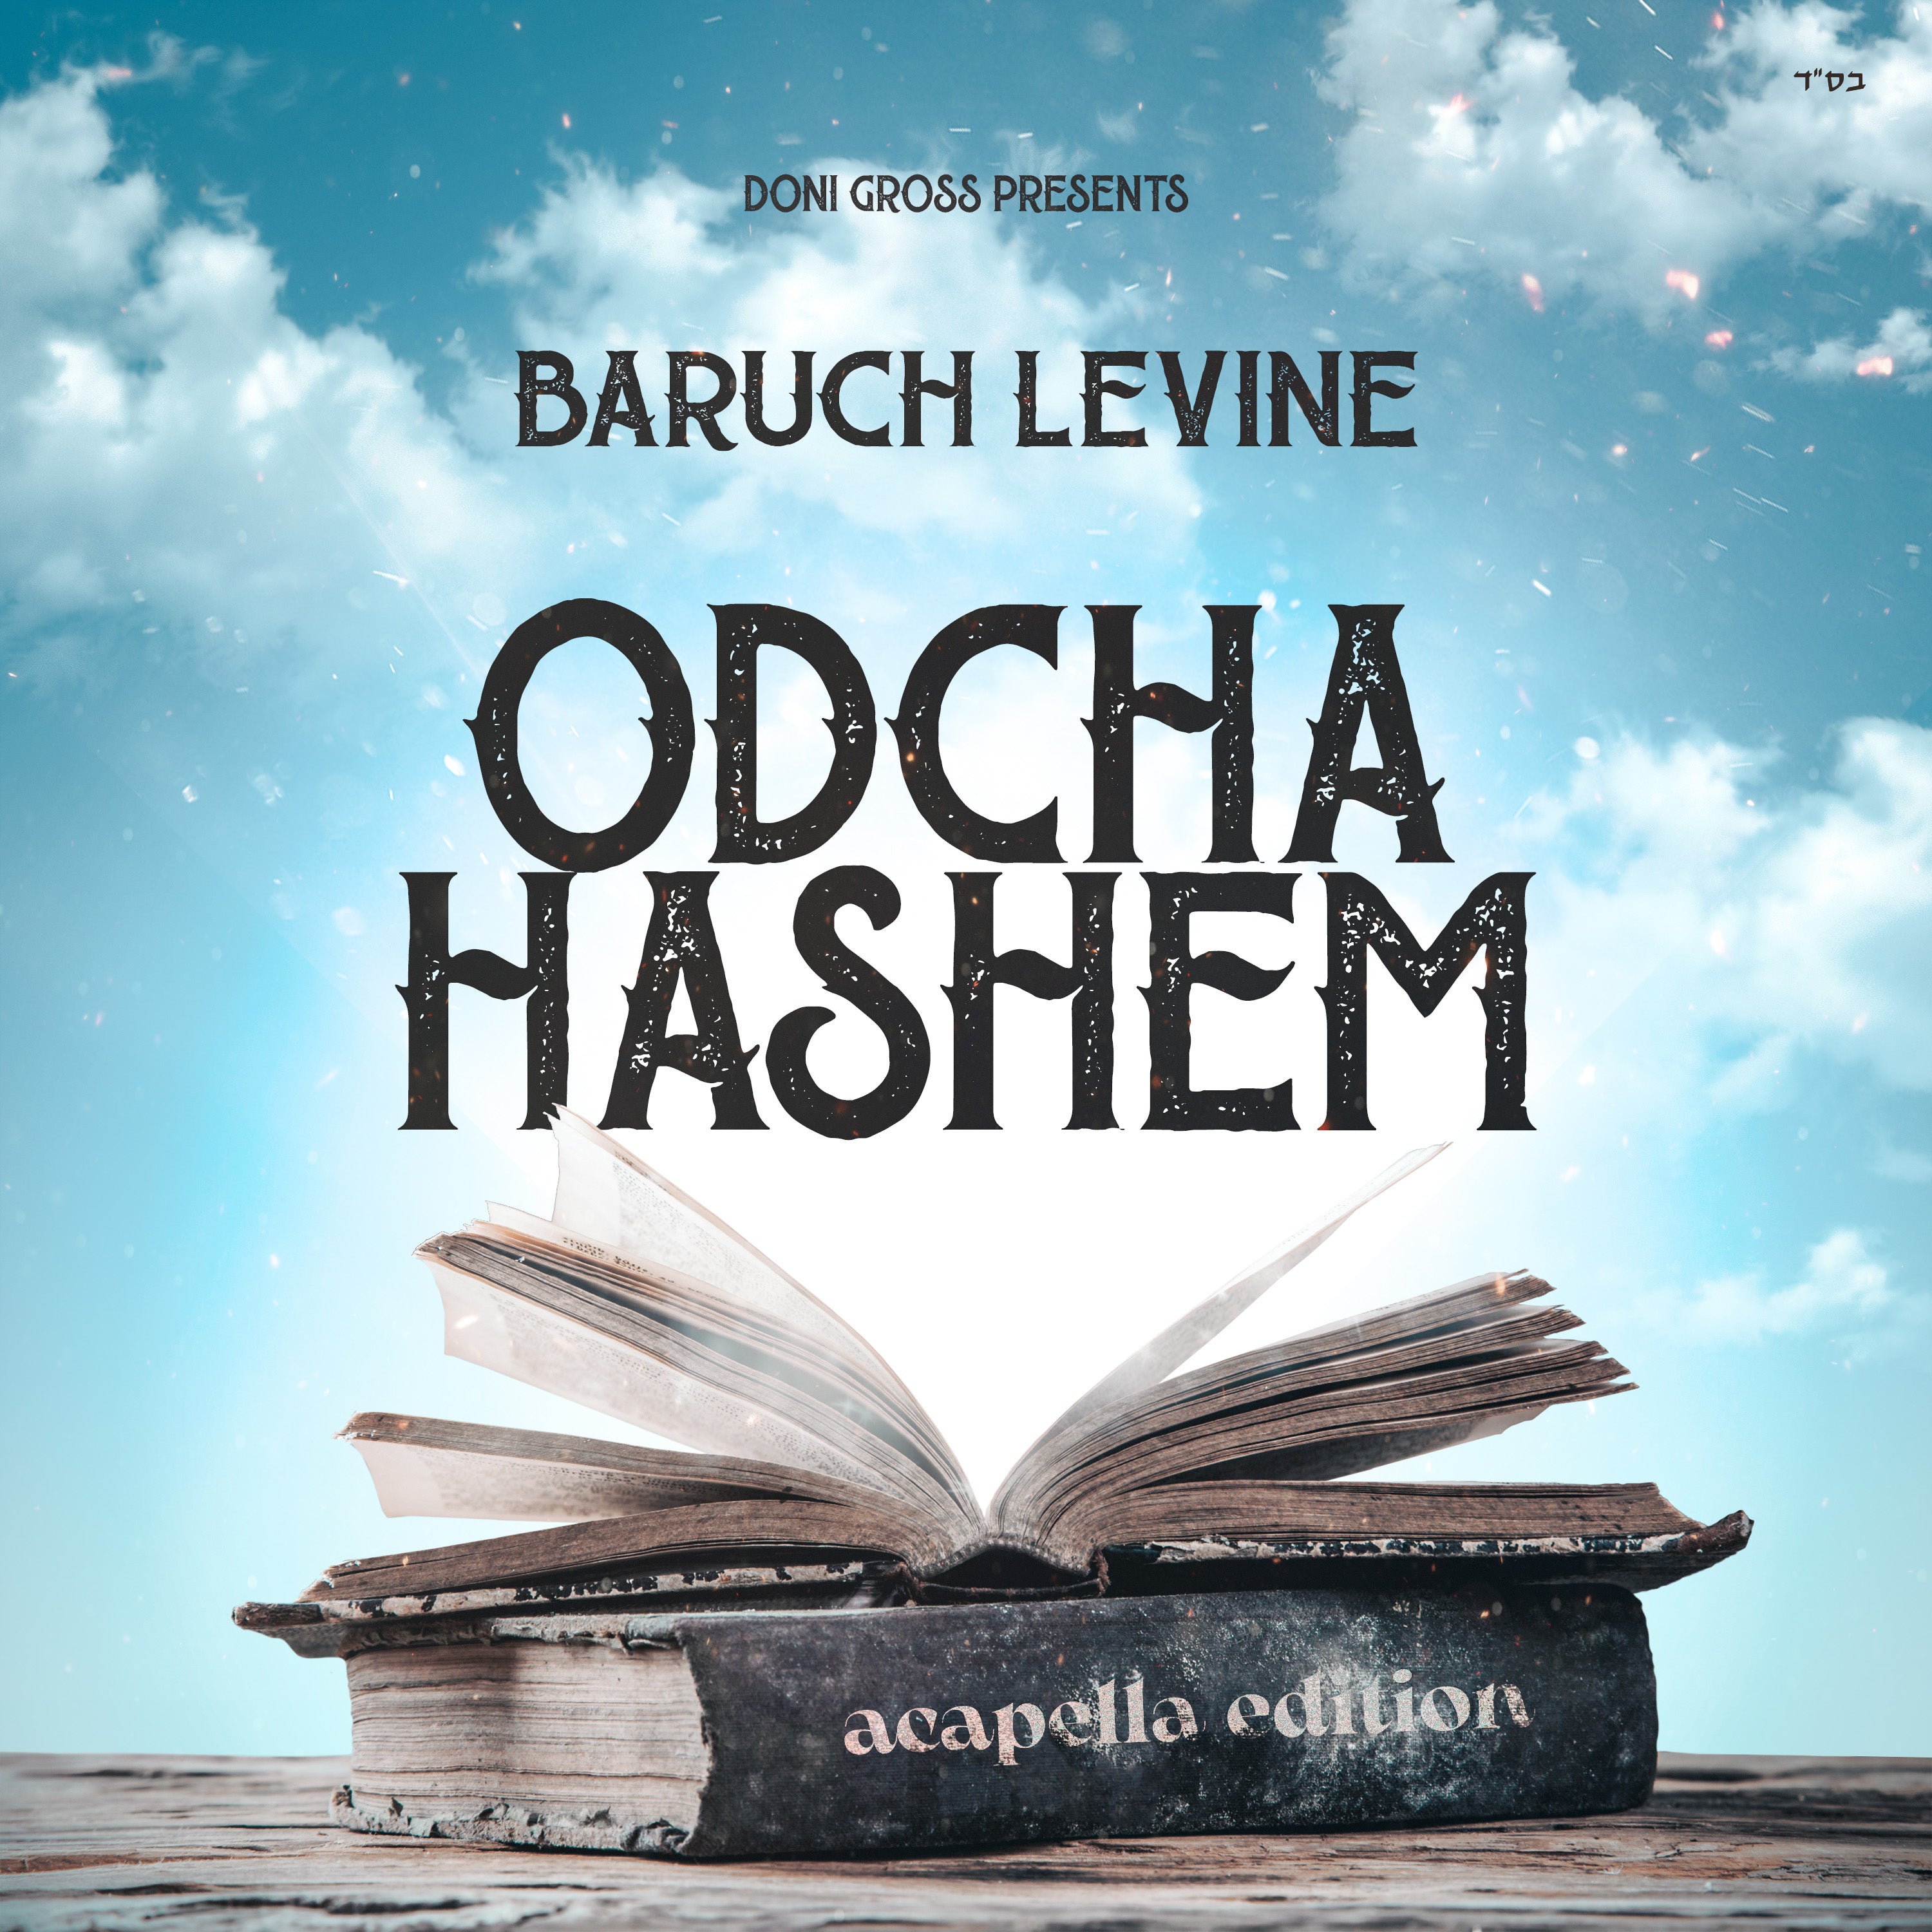 Baruch Levine - Odcha Hashem [Acapella] (Single)